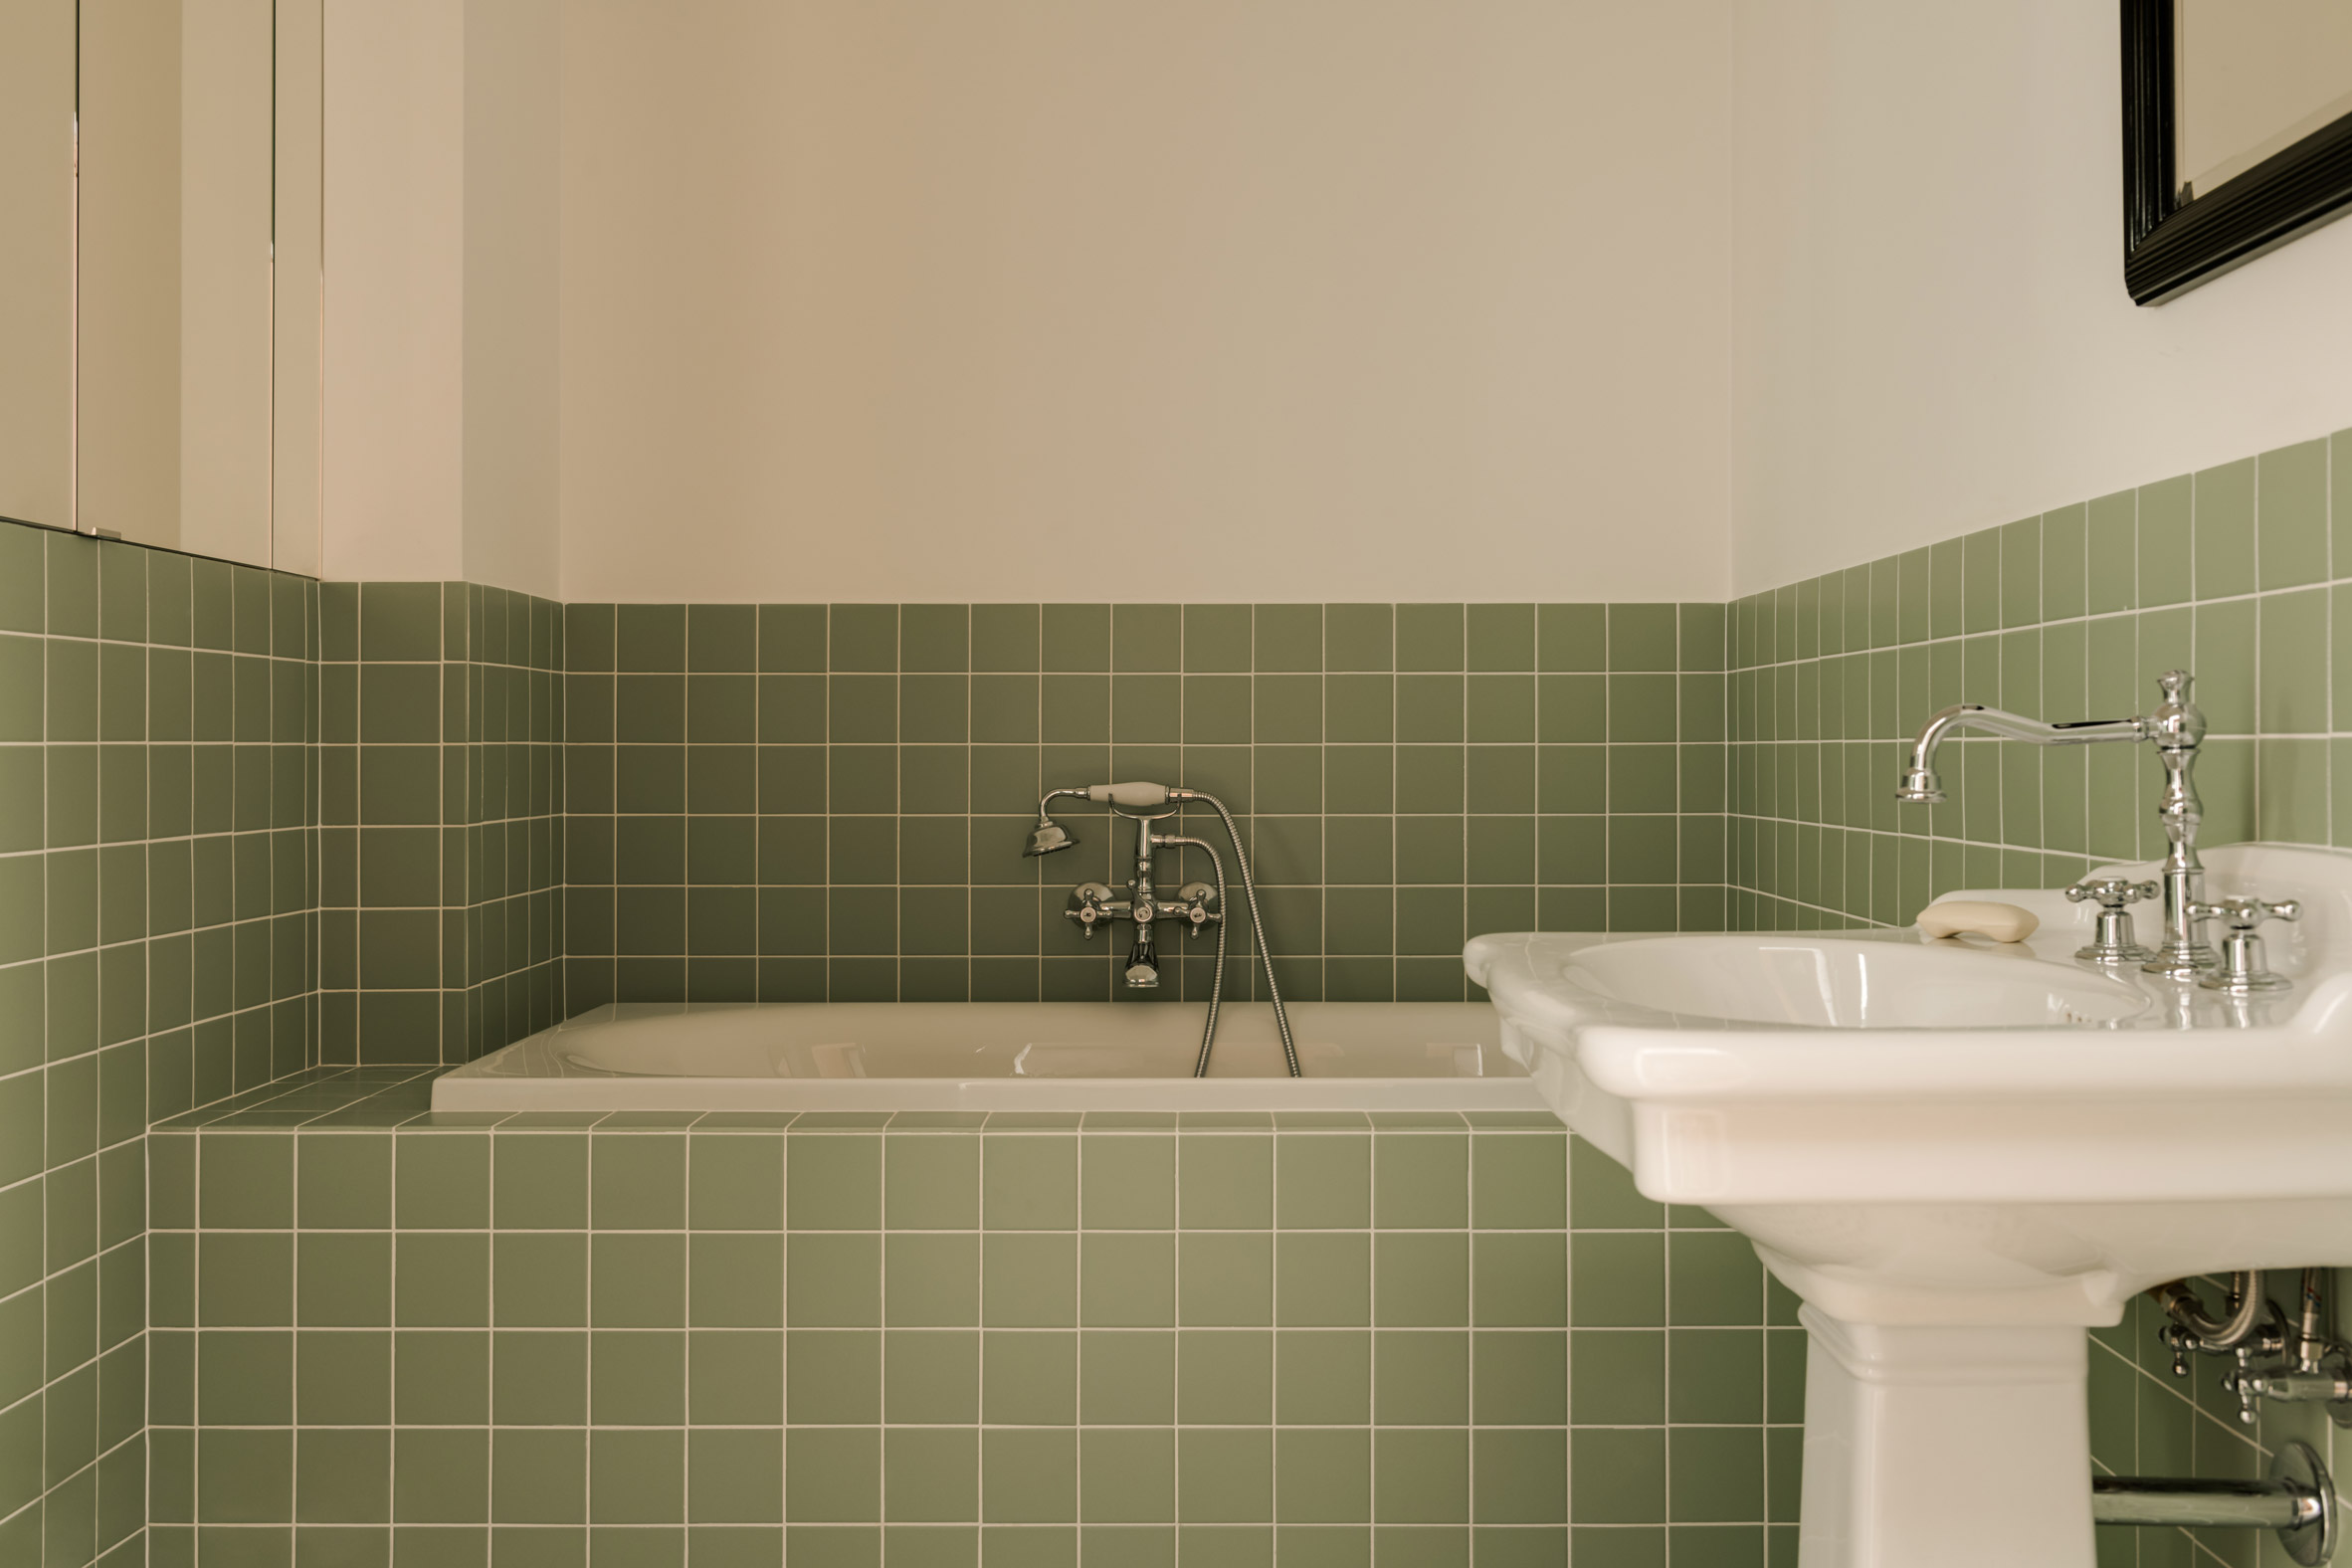 Pistachio-coloured bathroom